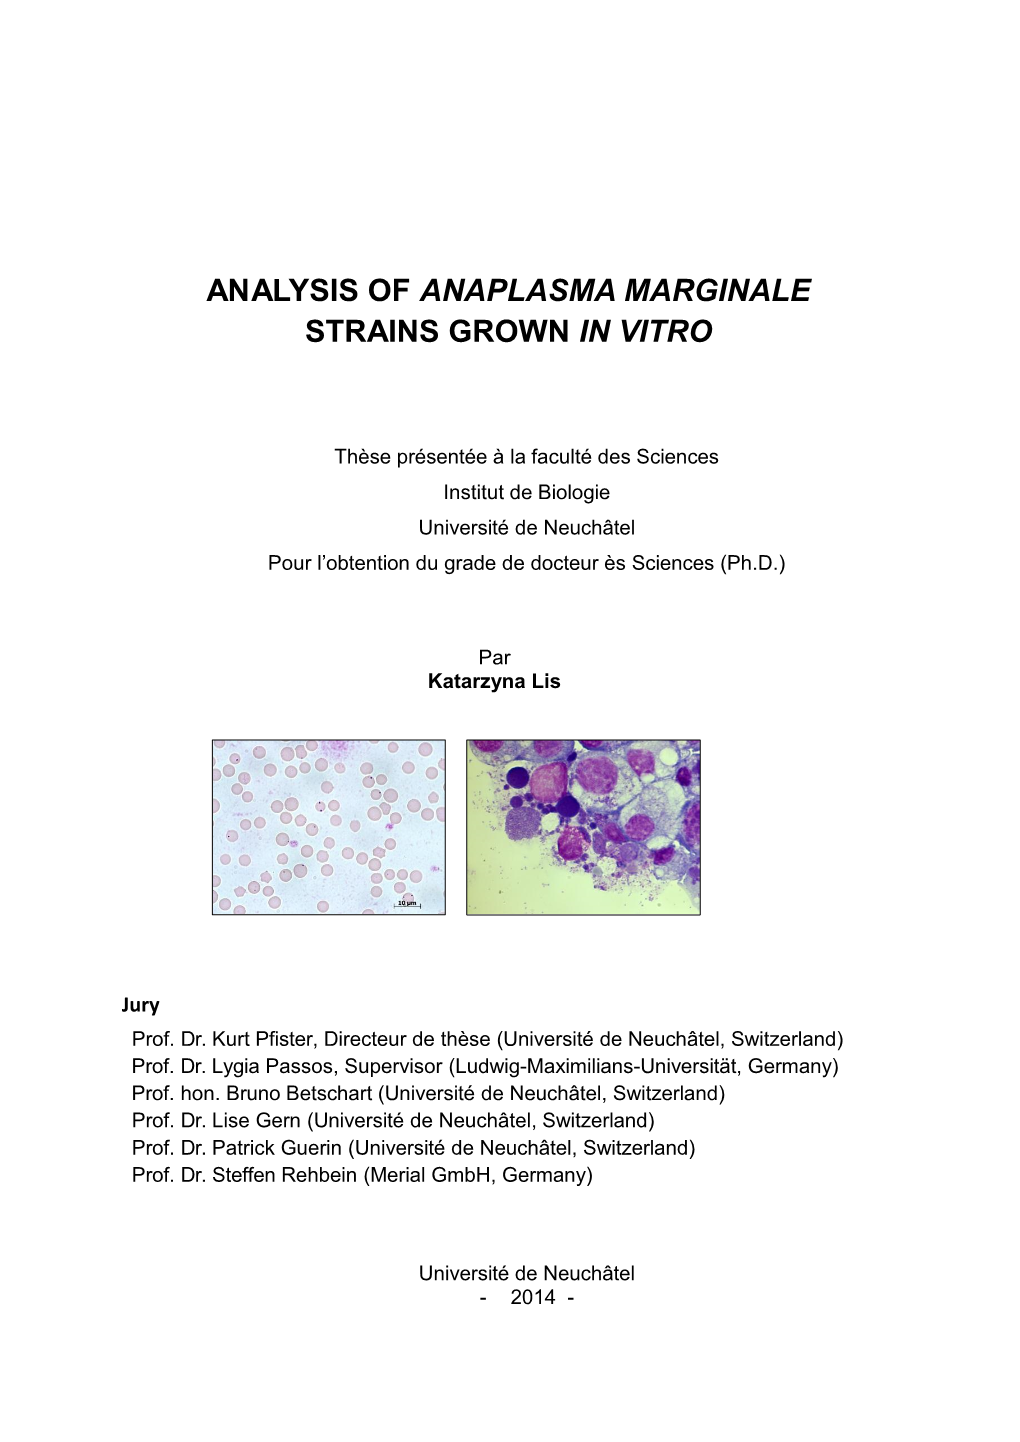 Analysis of Anaplasma Marginale Strains Grown in Vitro